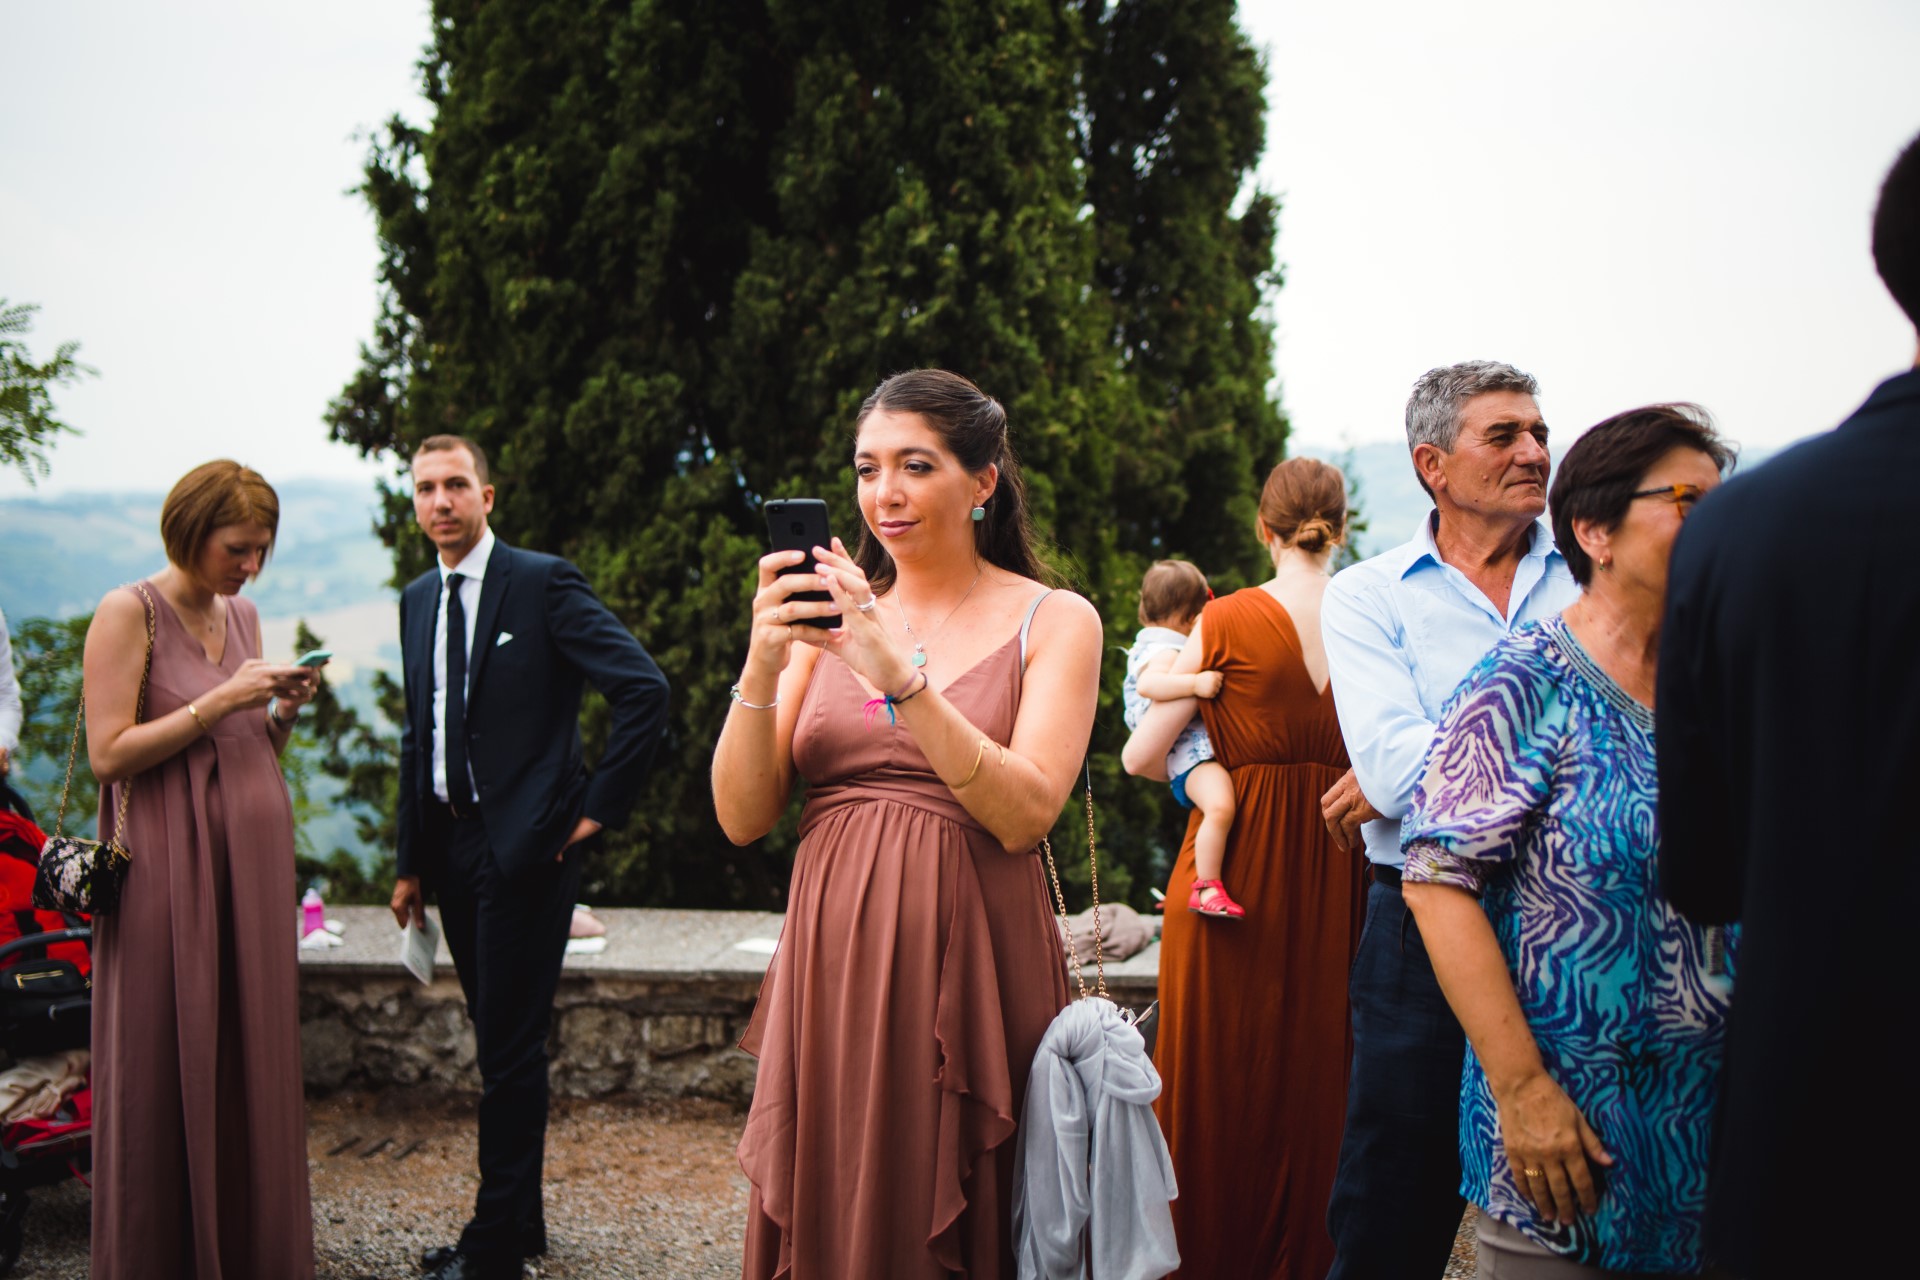 Ste&Michi fotografo matrimonio destination wedding photographer videographer luxury reportage italia italy como lake amalfi coast apulia rome roma sicily masseria potenti tuscany